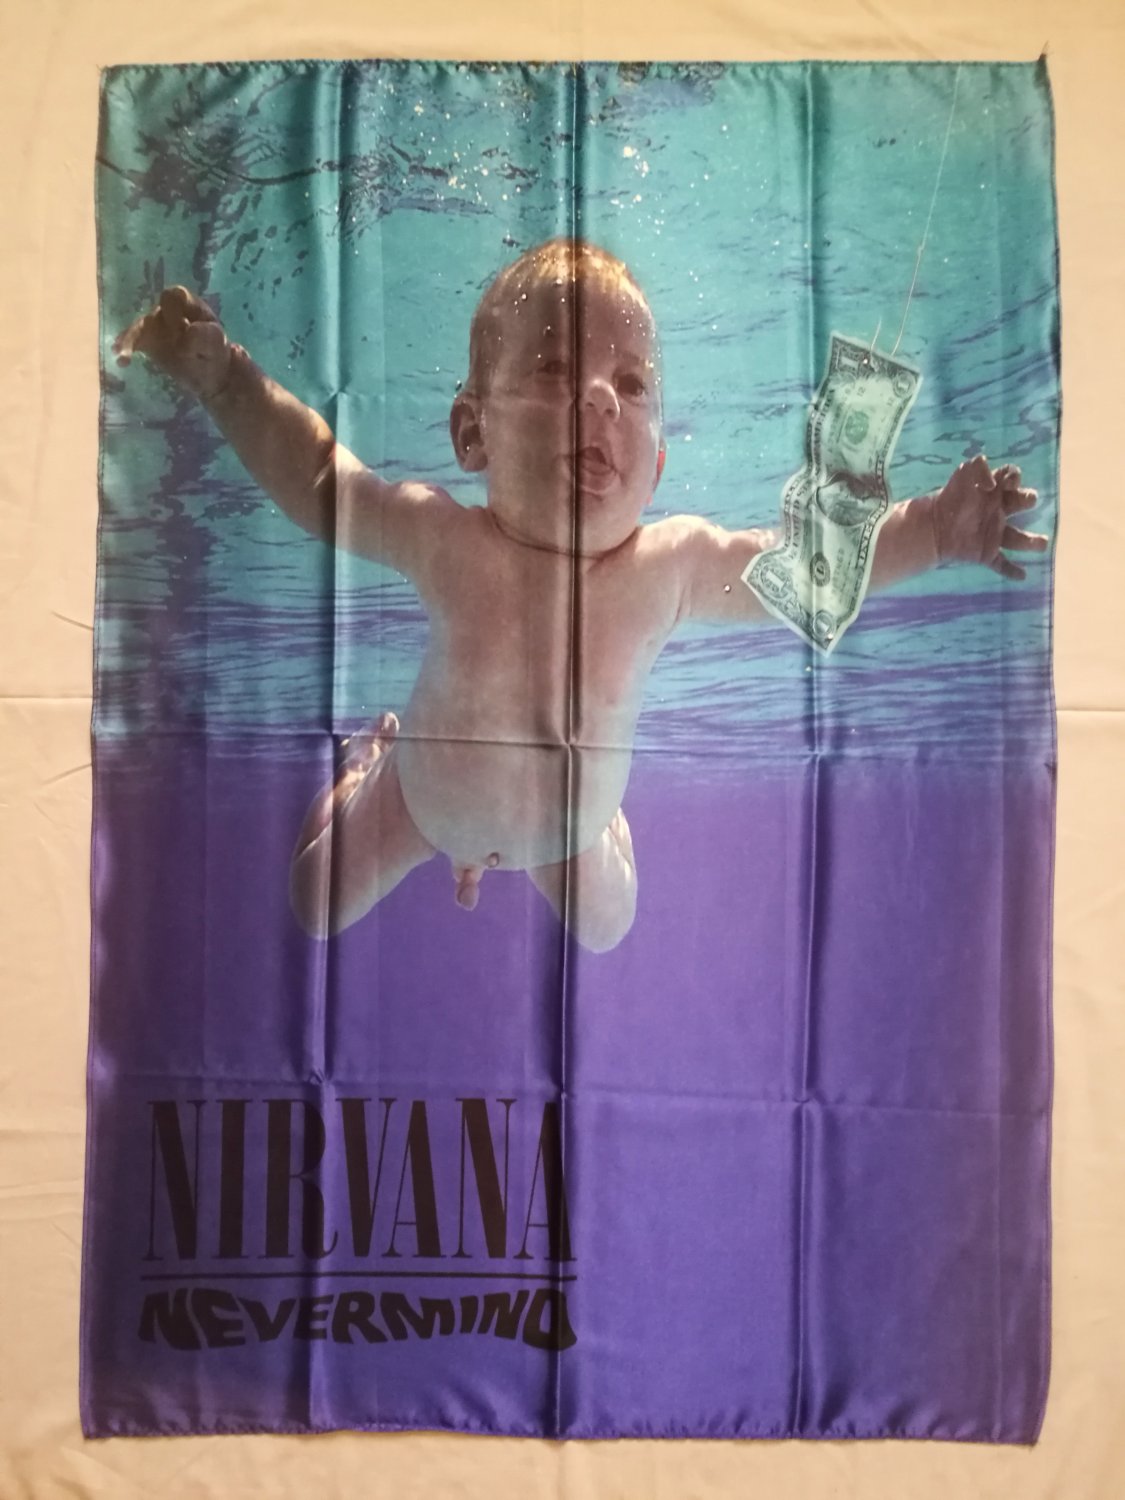 NIRVANA - Nevermind FLAG cloth POSTER Banner GRUNGE Kurt Cobain Alice in chains